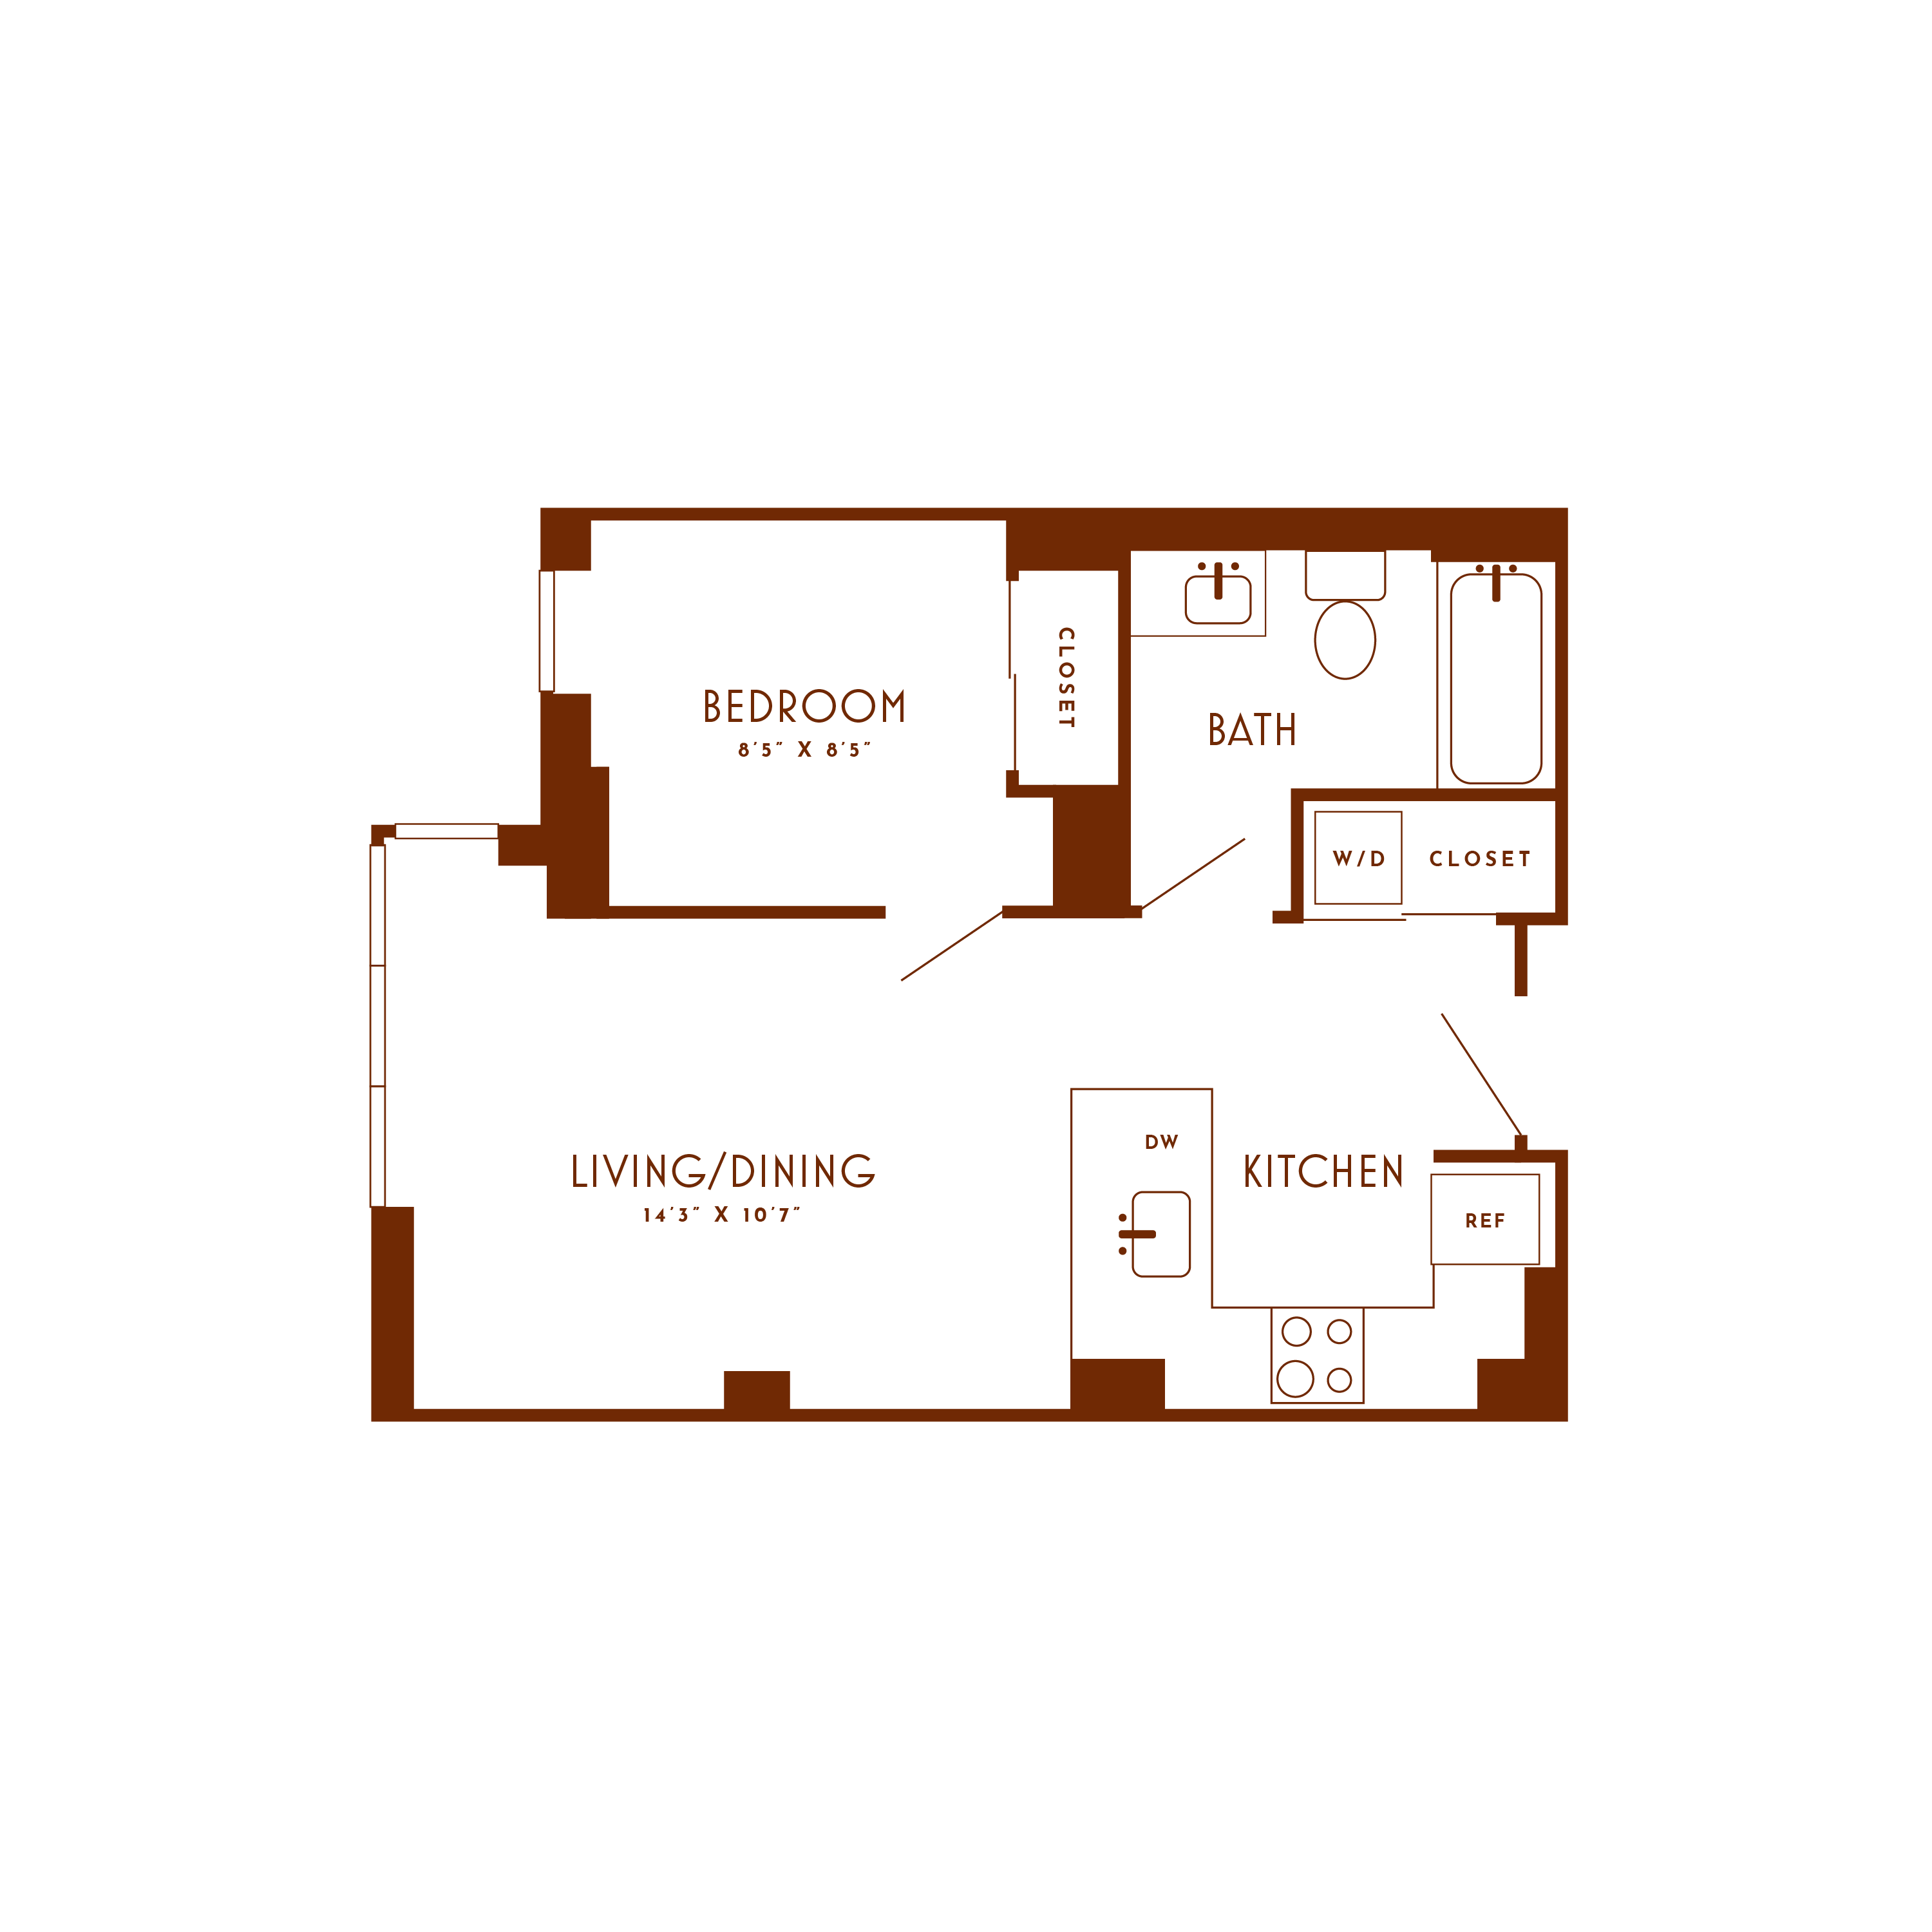 Floor plan image of unit 809